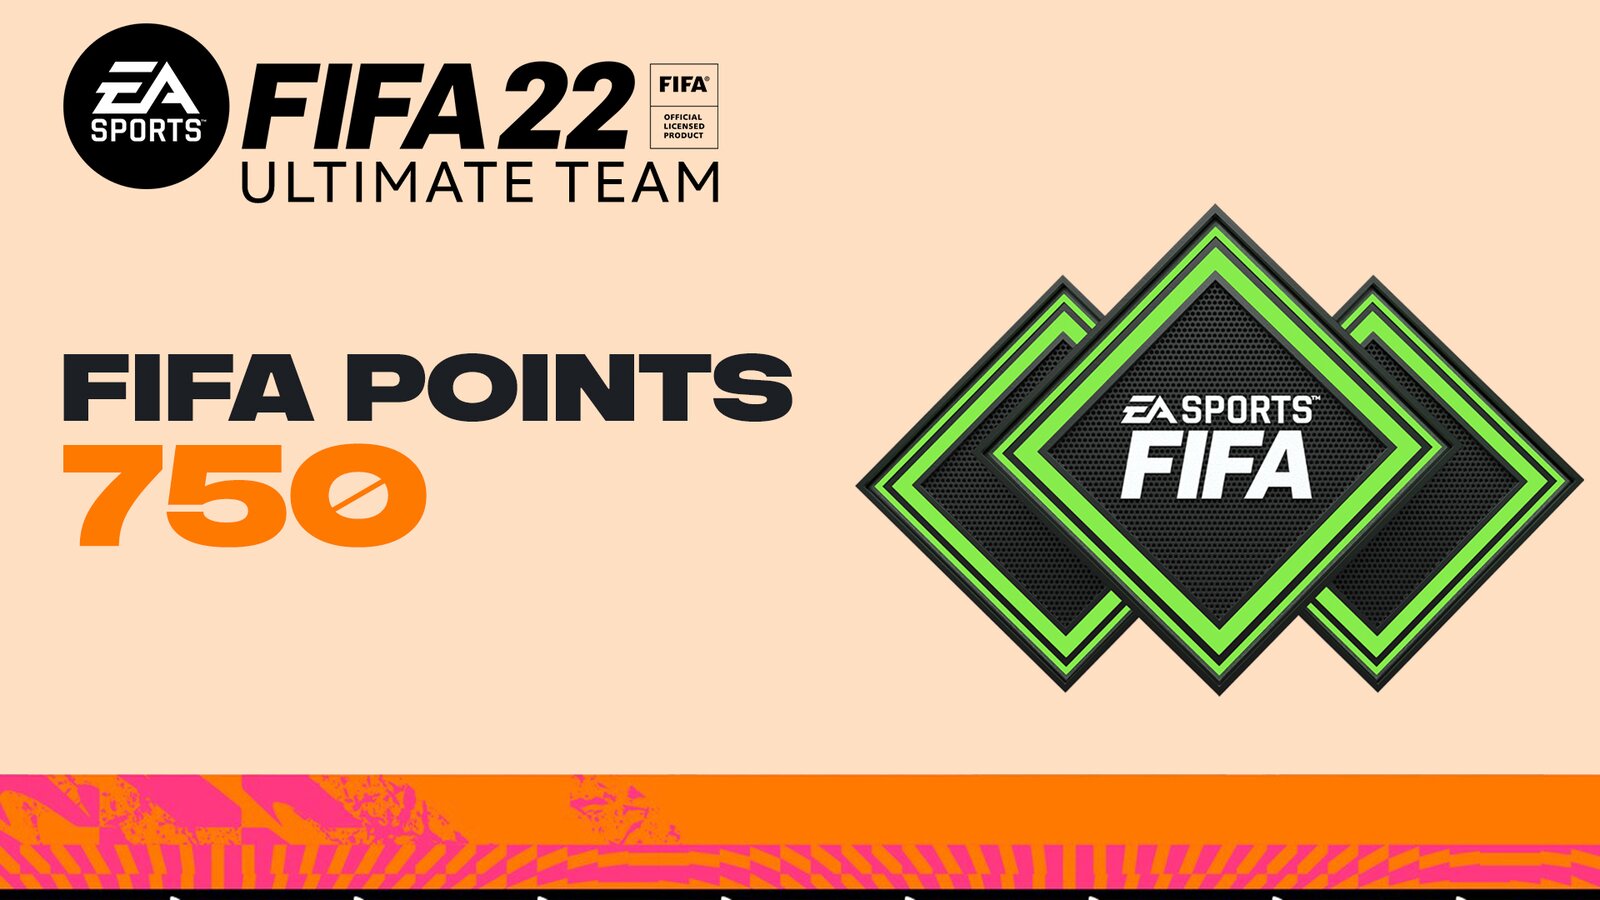 FIFA 22 Ultimate Team - 750 очков FIFA Points